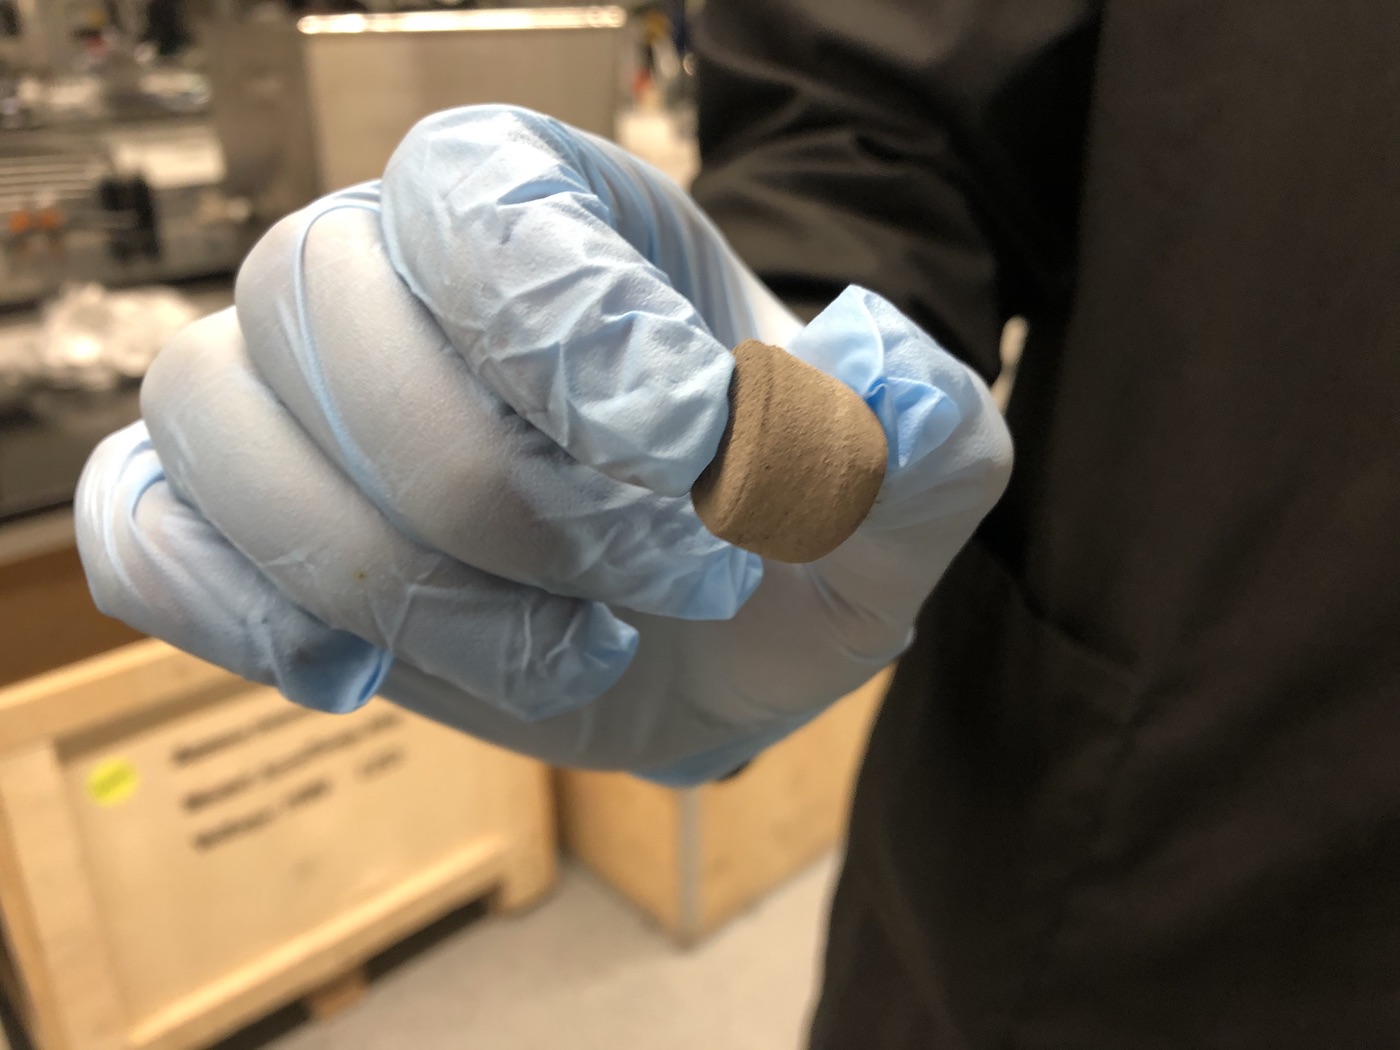 Scientist holds up a "precursor" or the bulk material used to make nano materials